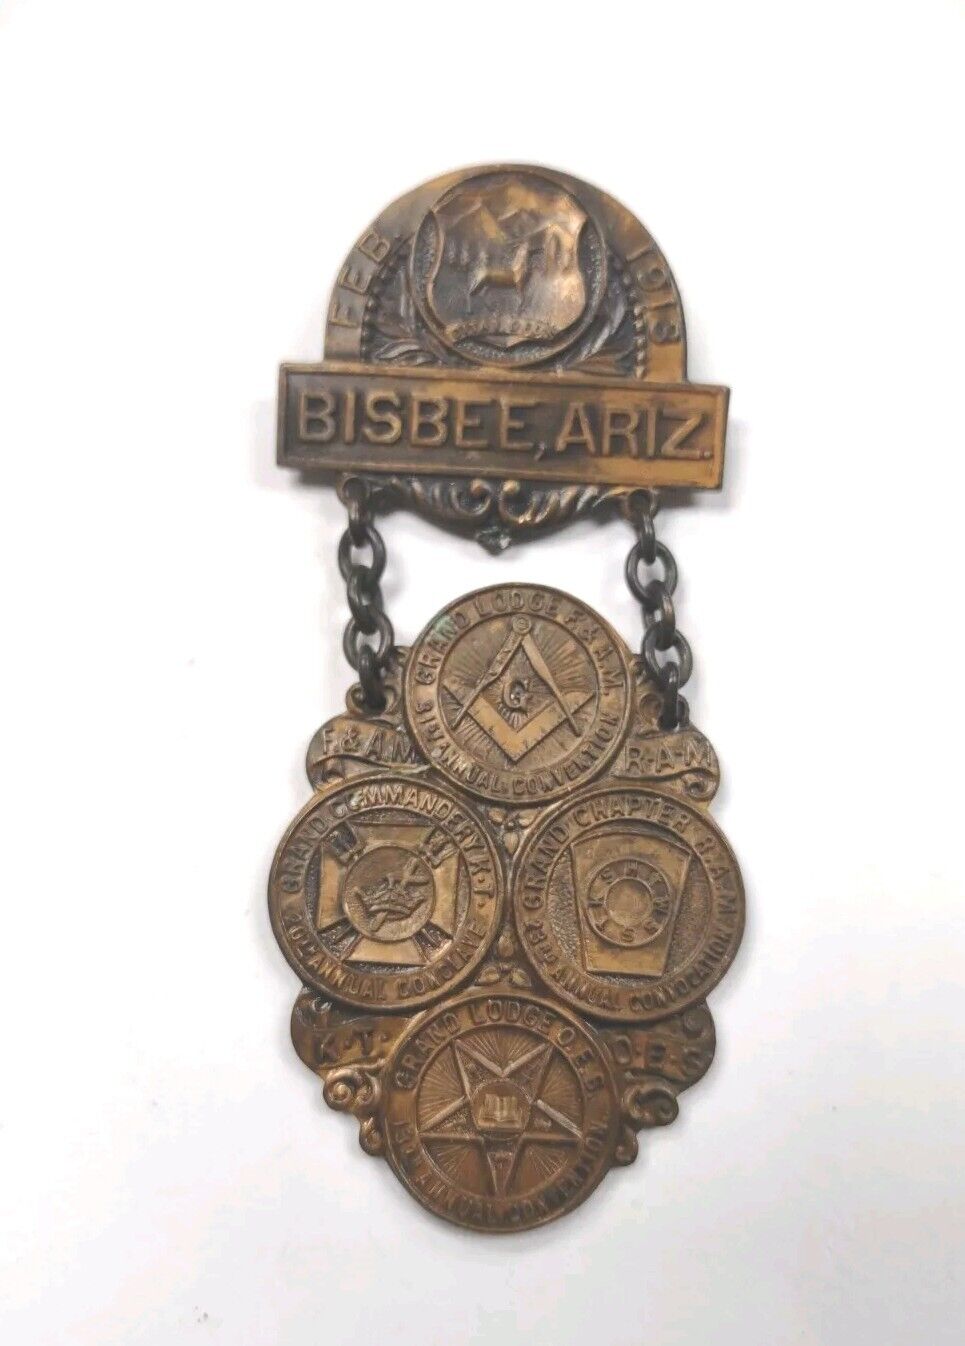 Mason 31st Annual Convention Grand Lodge Bisbee Arizona 1913 Medal Pin, H12